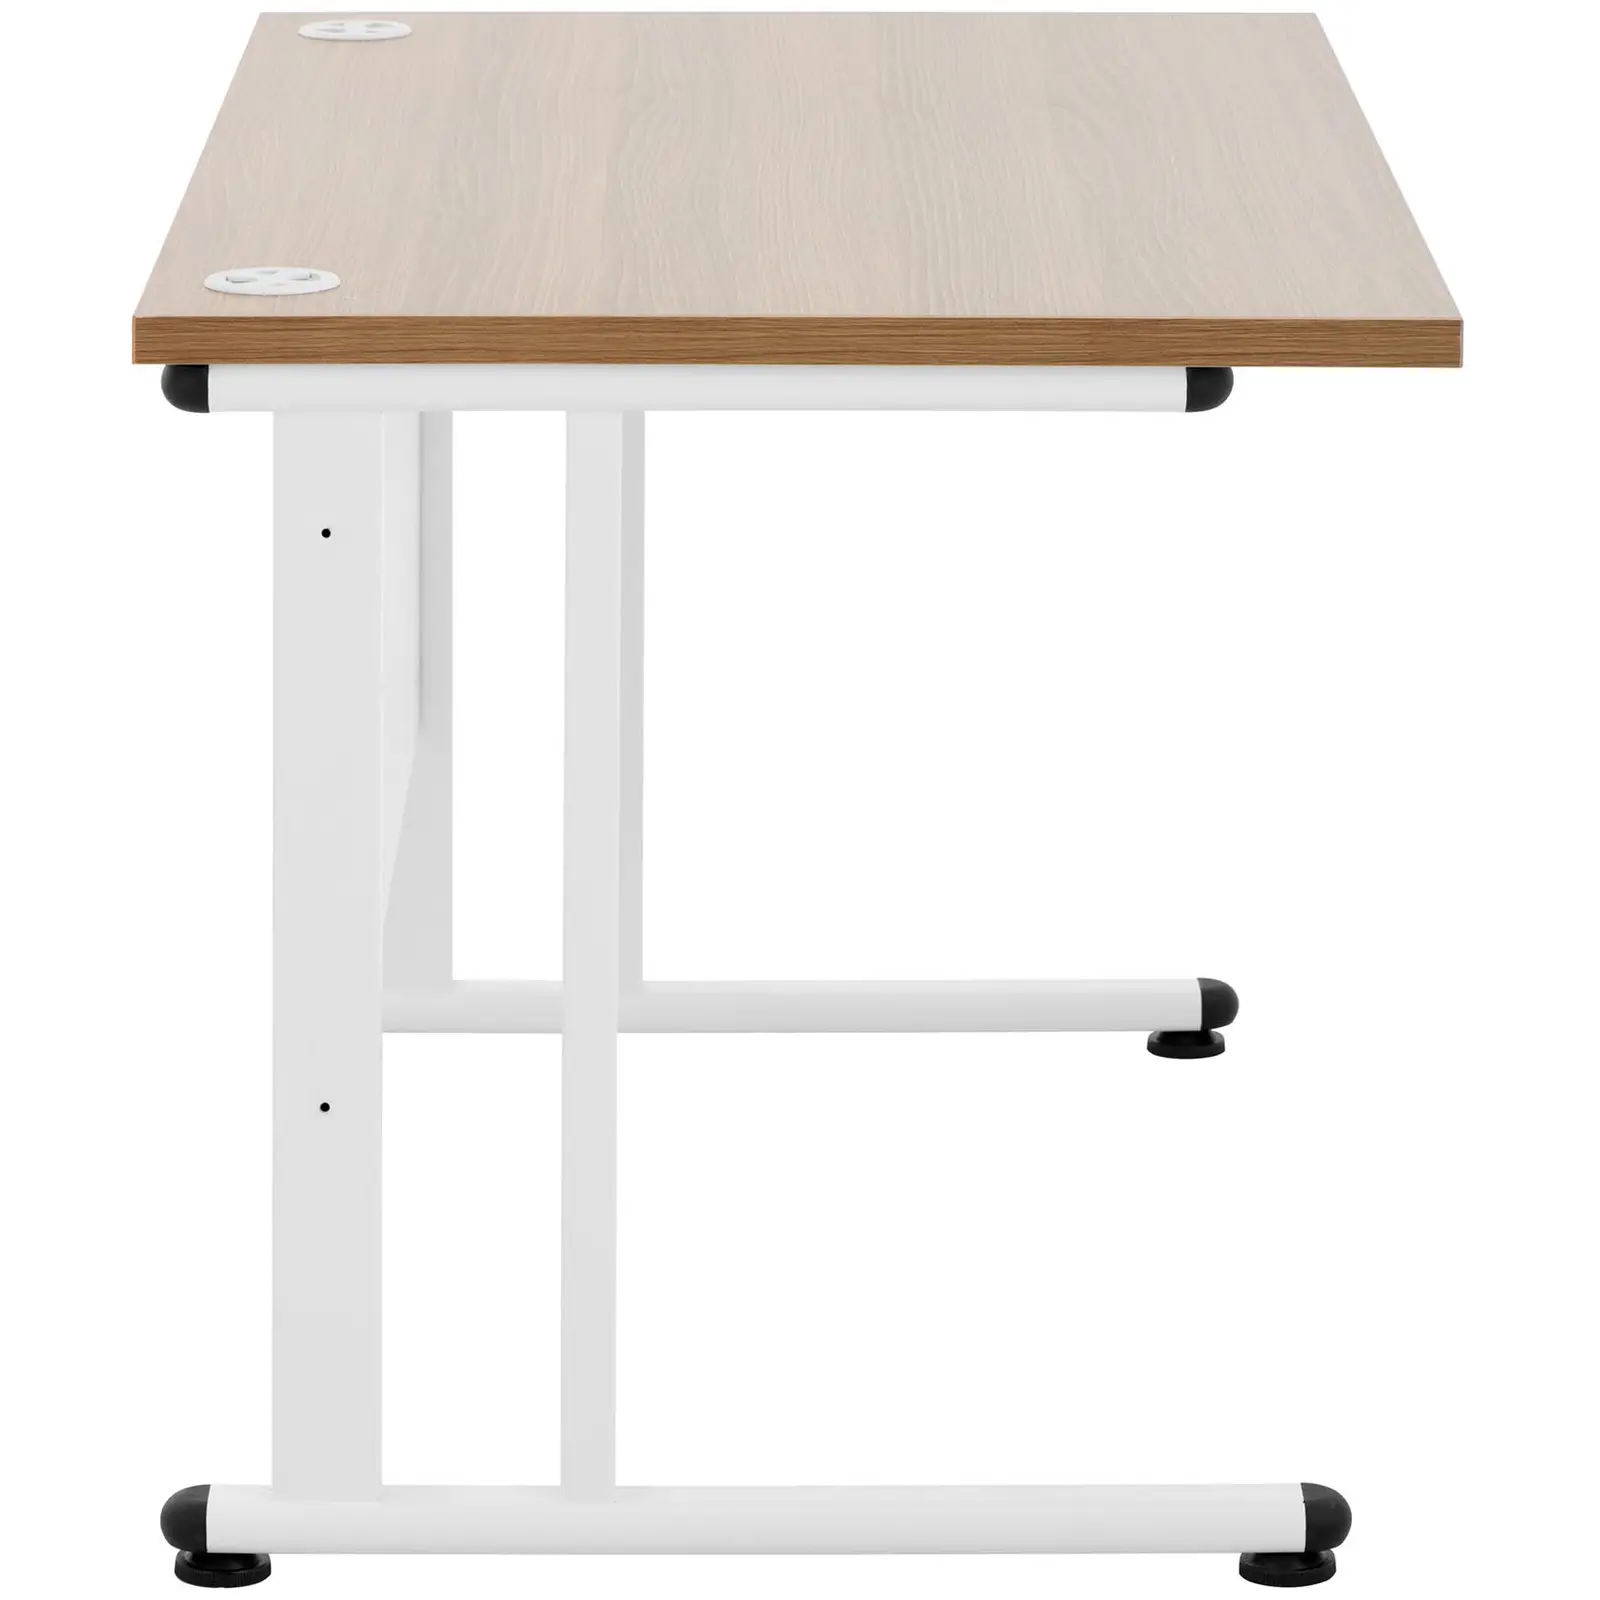 Íróasztal - 120 x 73 cm - barna/fehér